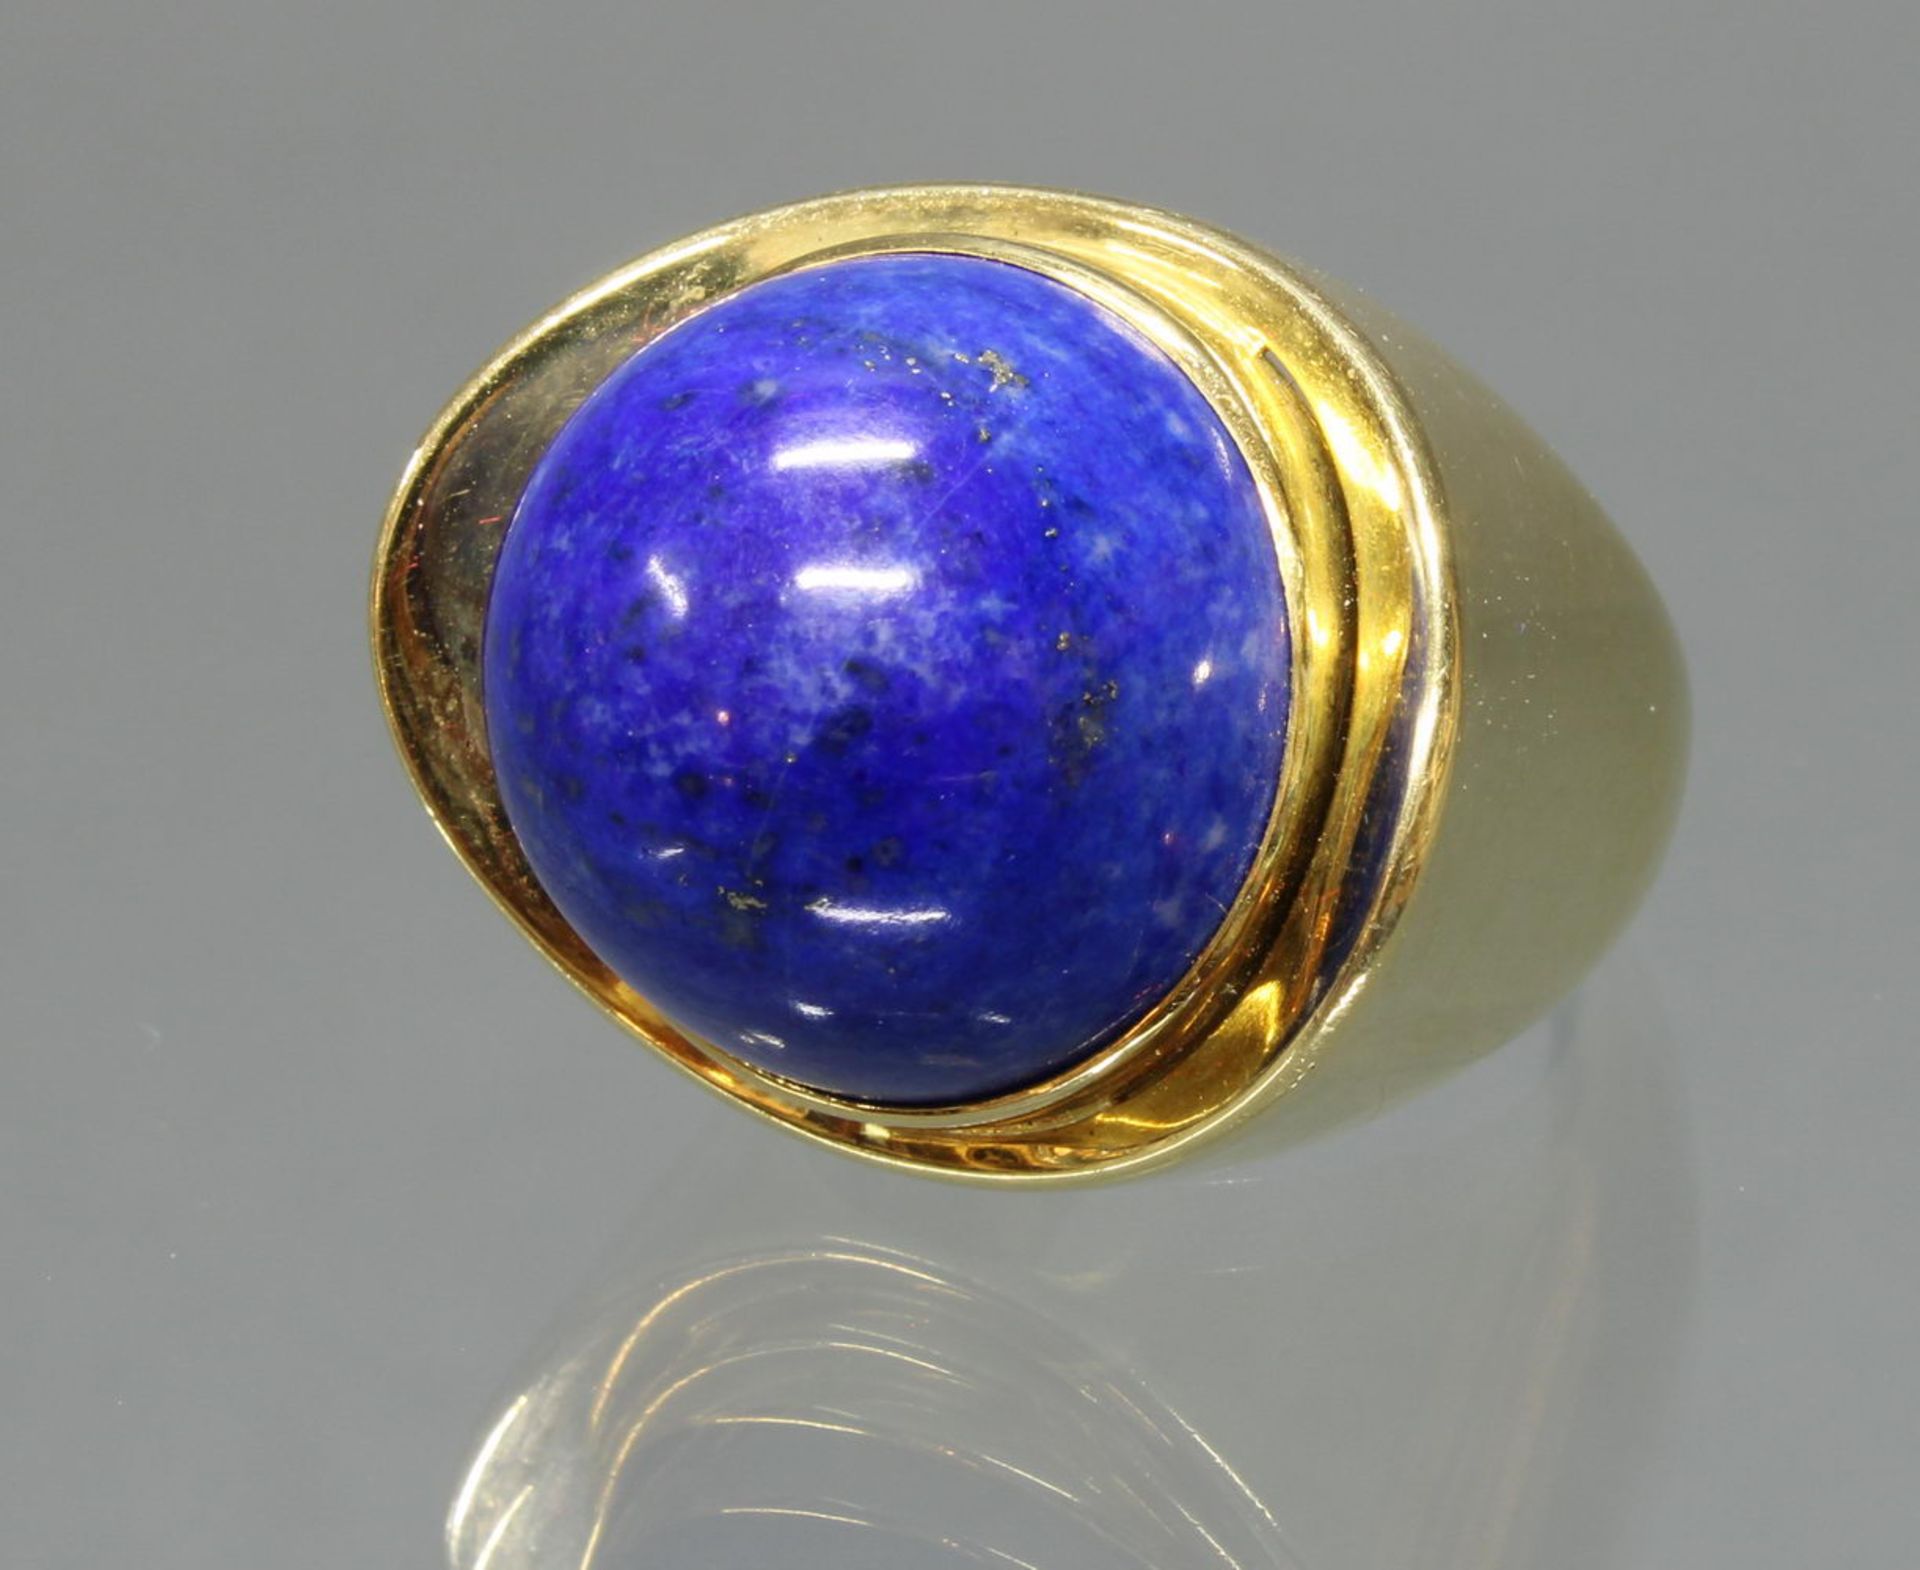 Ring, 1950er/1960er Jahre, GG 750, 1 Lapislazuli-Cabochon 17.6 x 17.2 x 11.9 mm, 22.5 g, RM 16.5, i